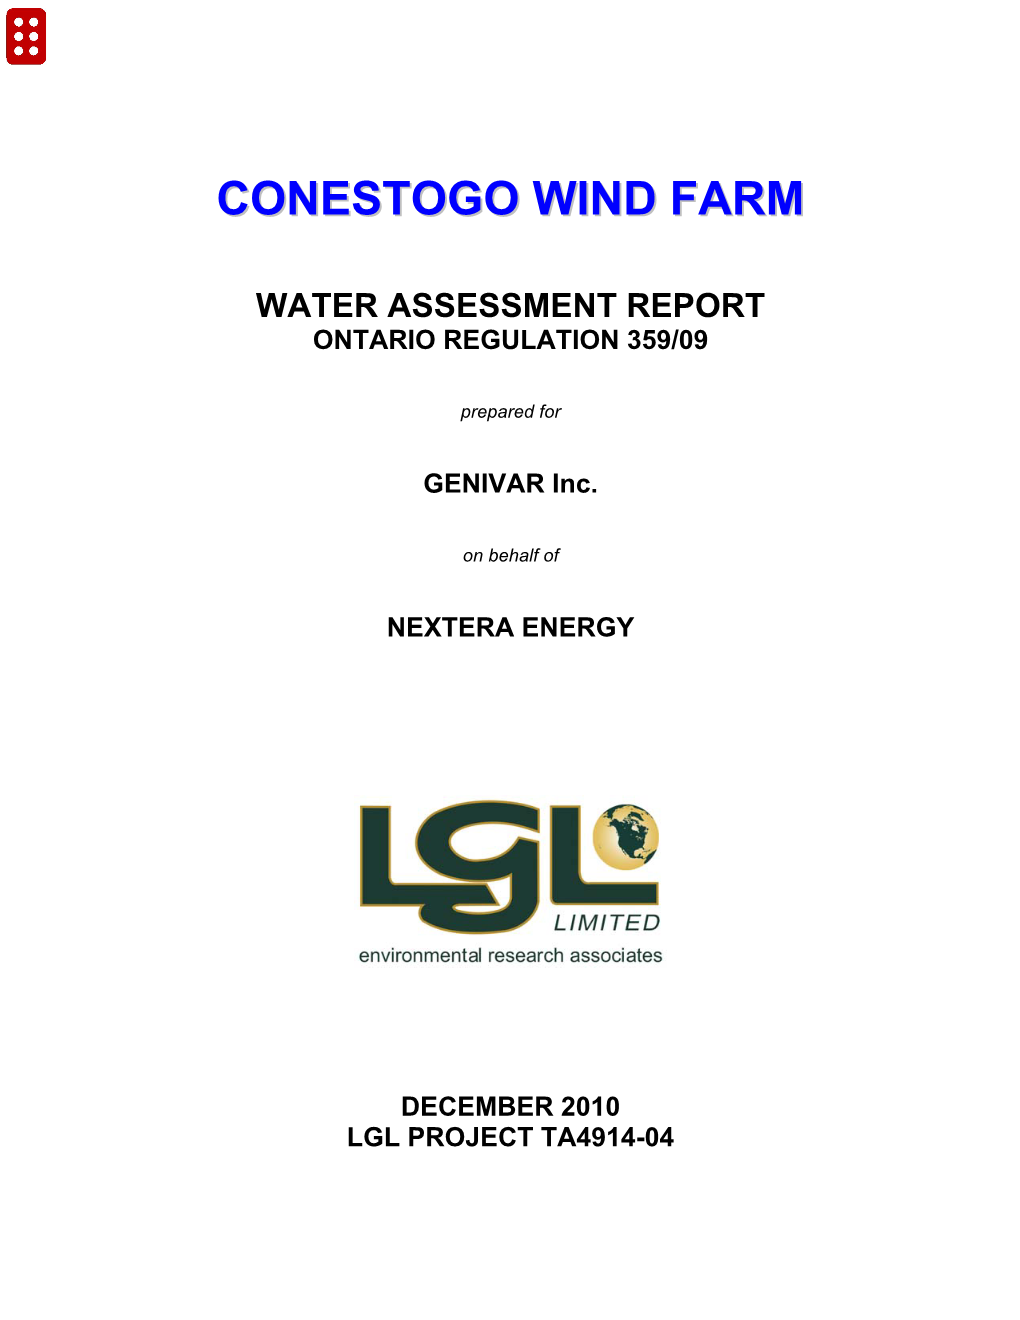 Conestogo Wind Farm December 2010 Water Report Project No